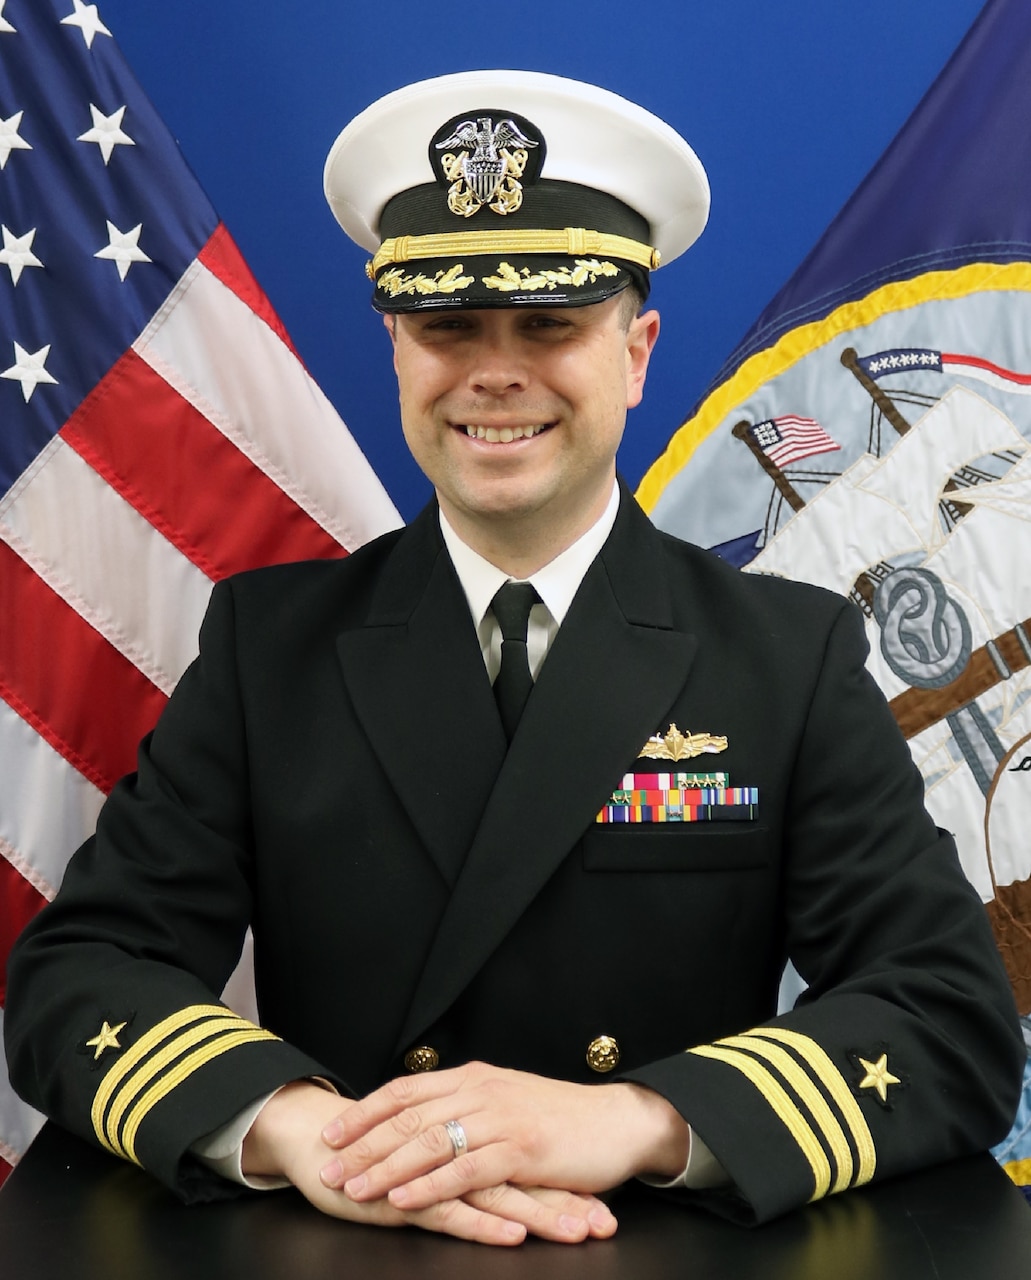 Commander Michael McInerney